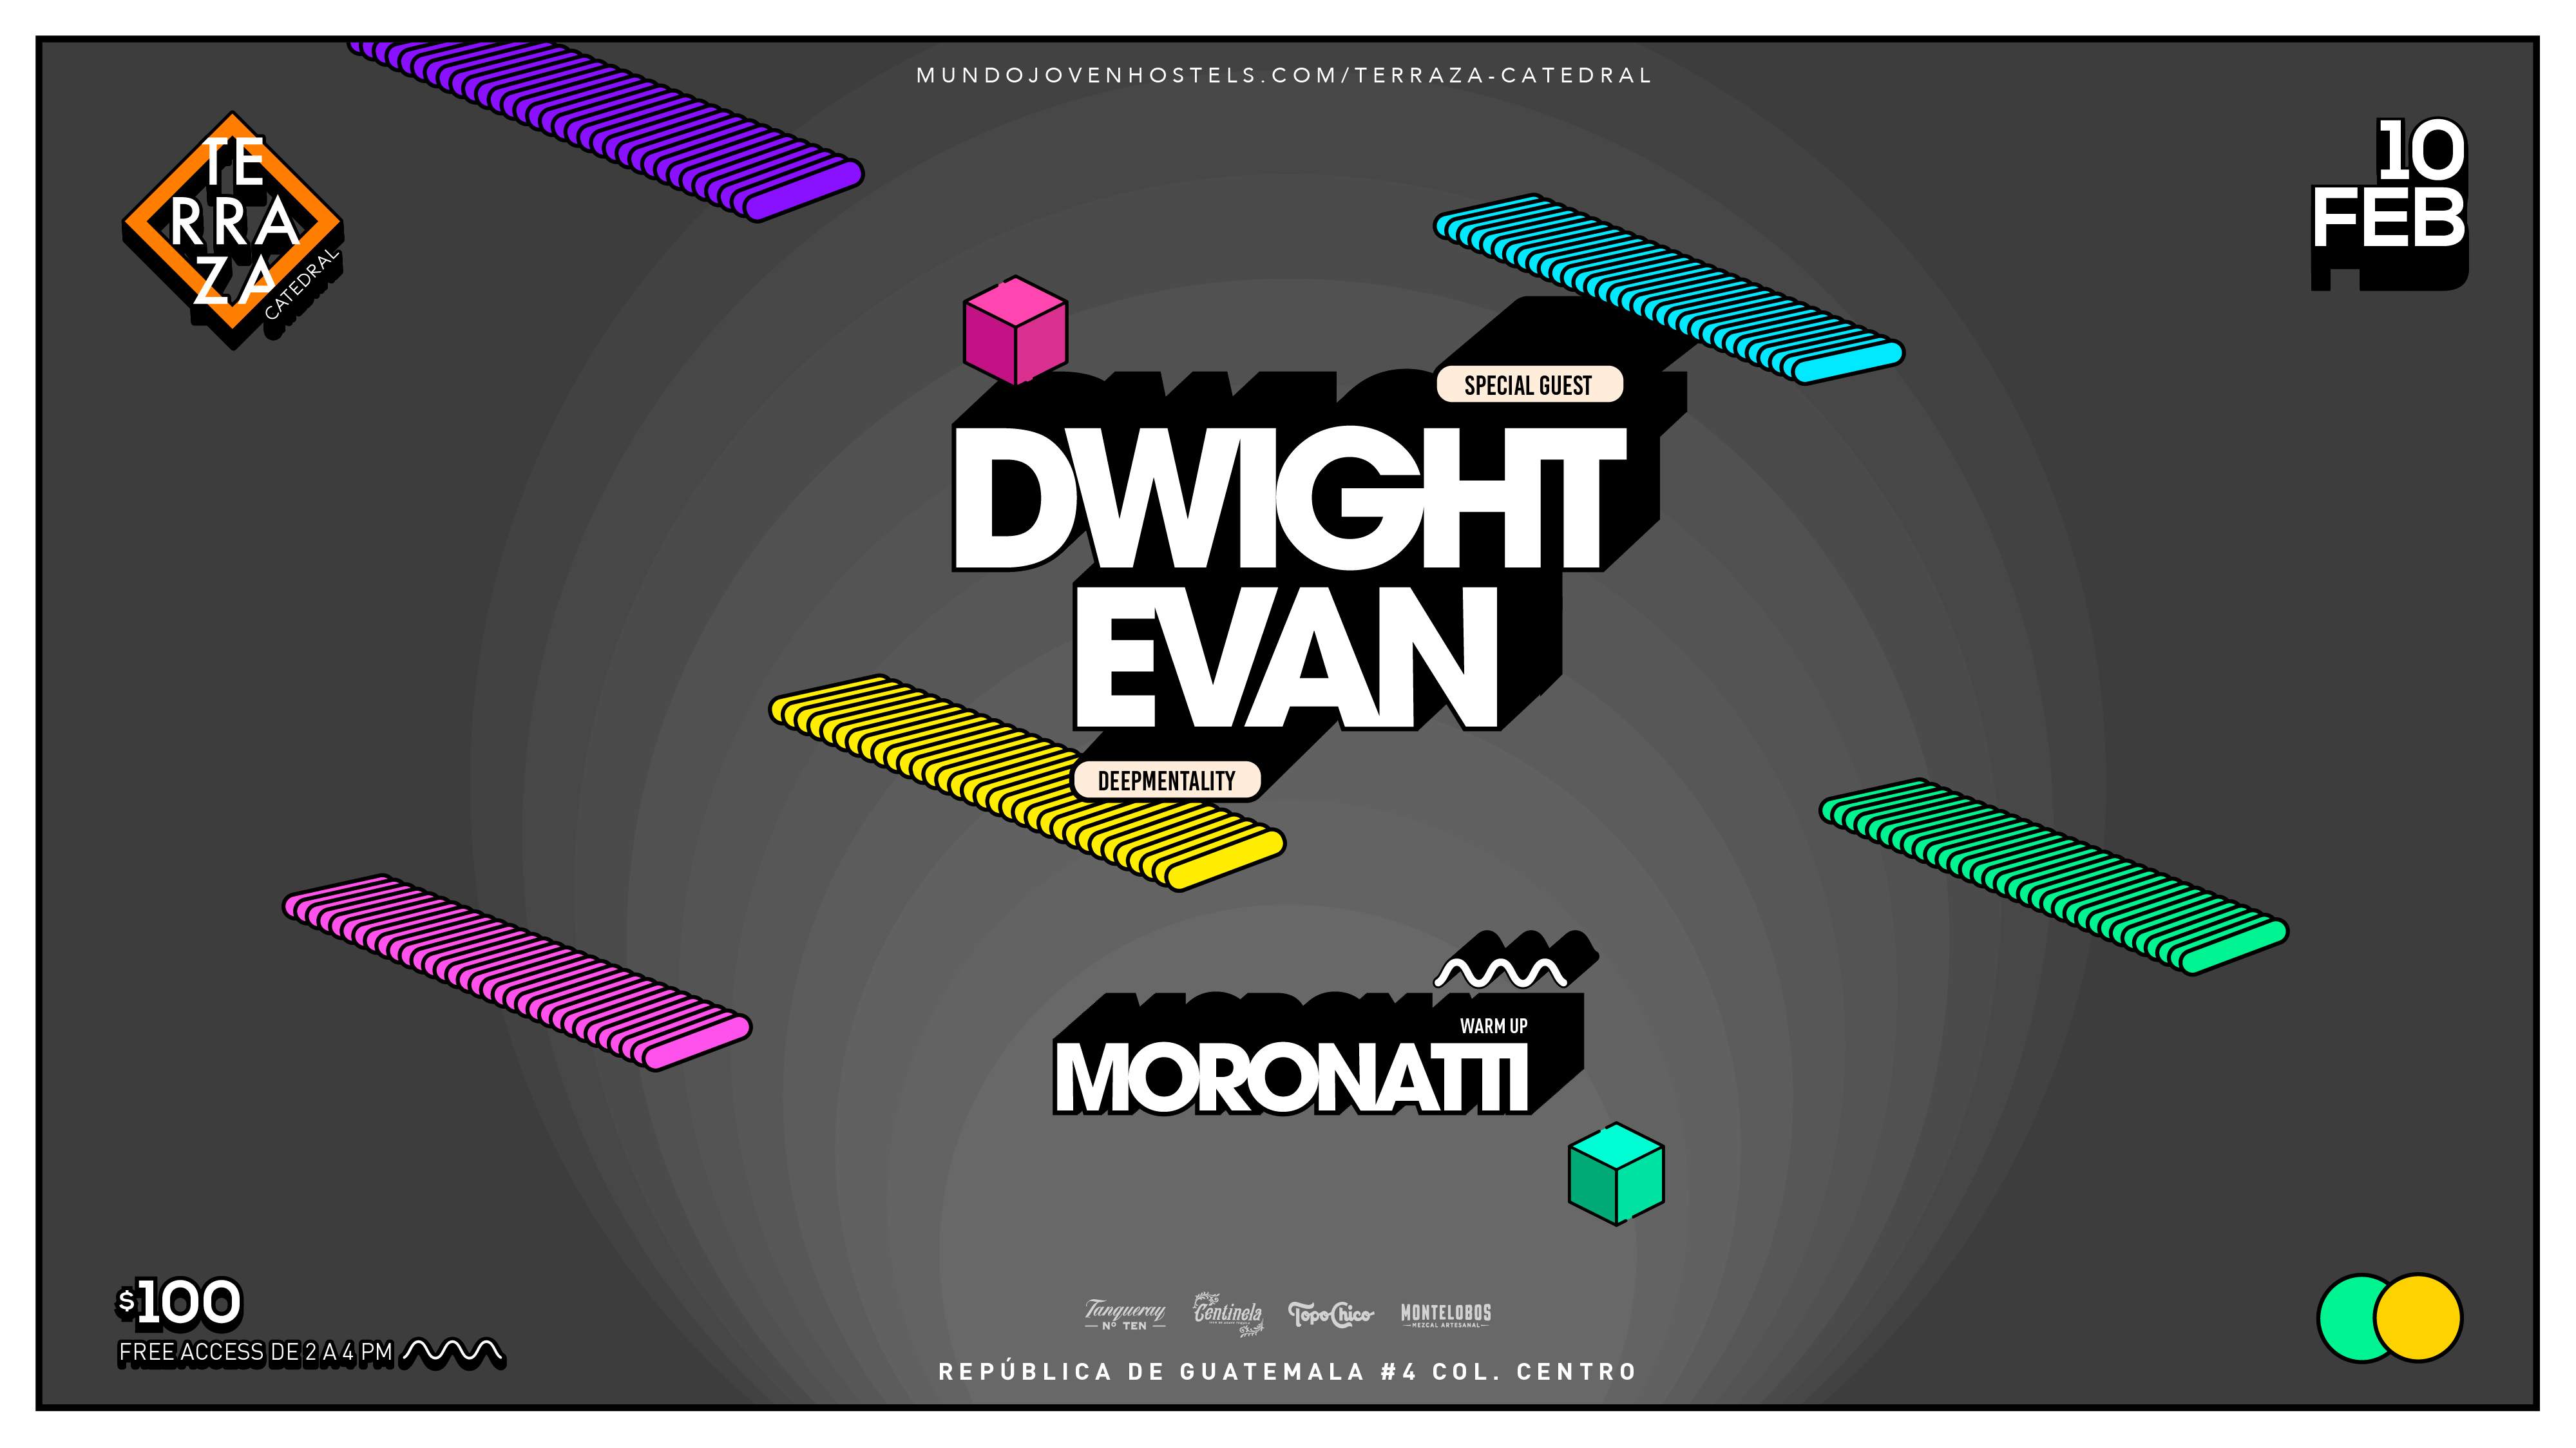 Dwight Evan + MORONATTI - フライヤー表